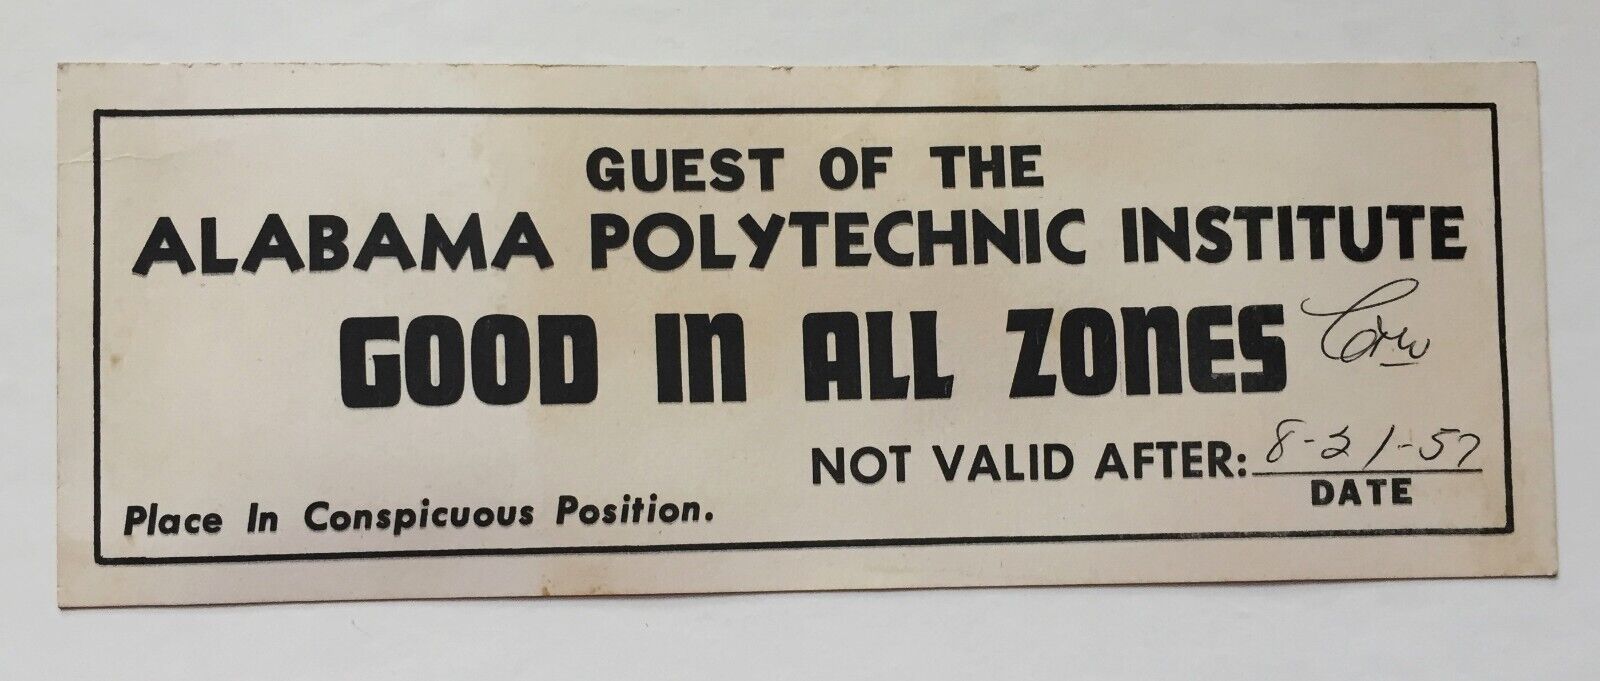 1957 GUEST OF THE ALABAMA POLYTECHNIC INSTITUTE AUBURN UNIVERSITY PARKING PASS